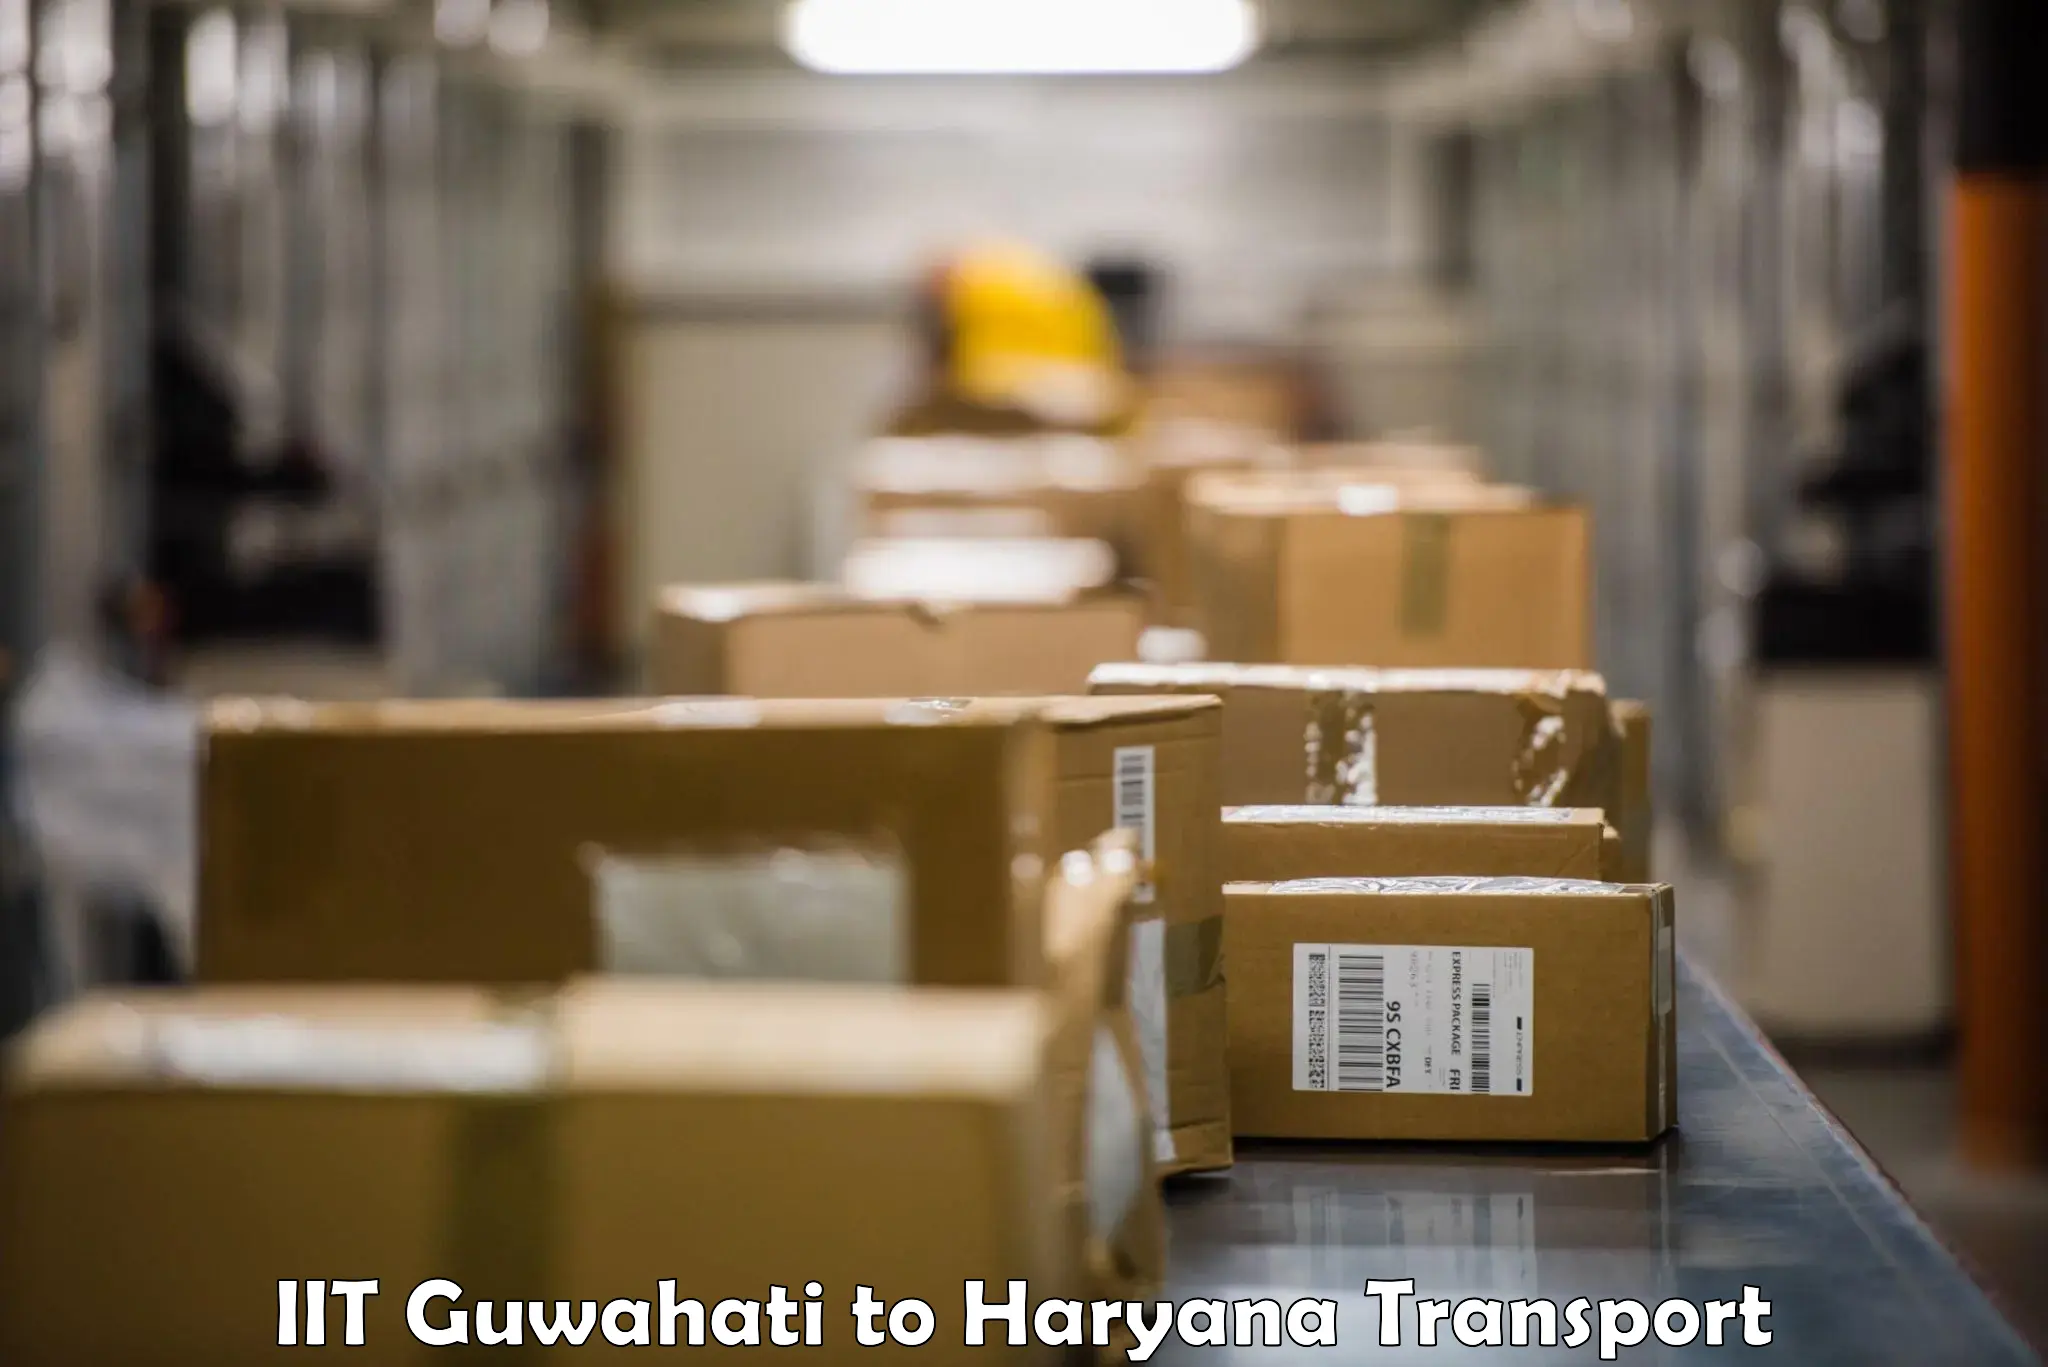 Online transport service IIT Guwahati to Mahendragarh